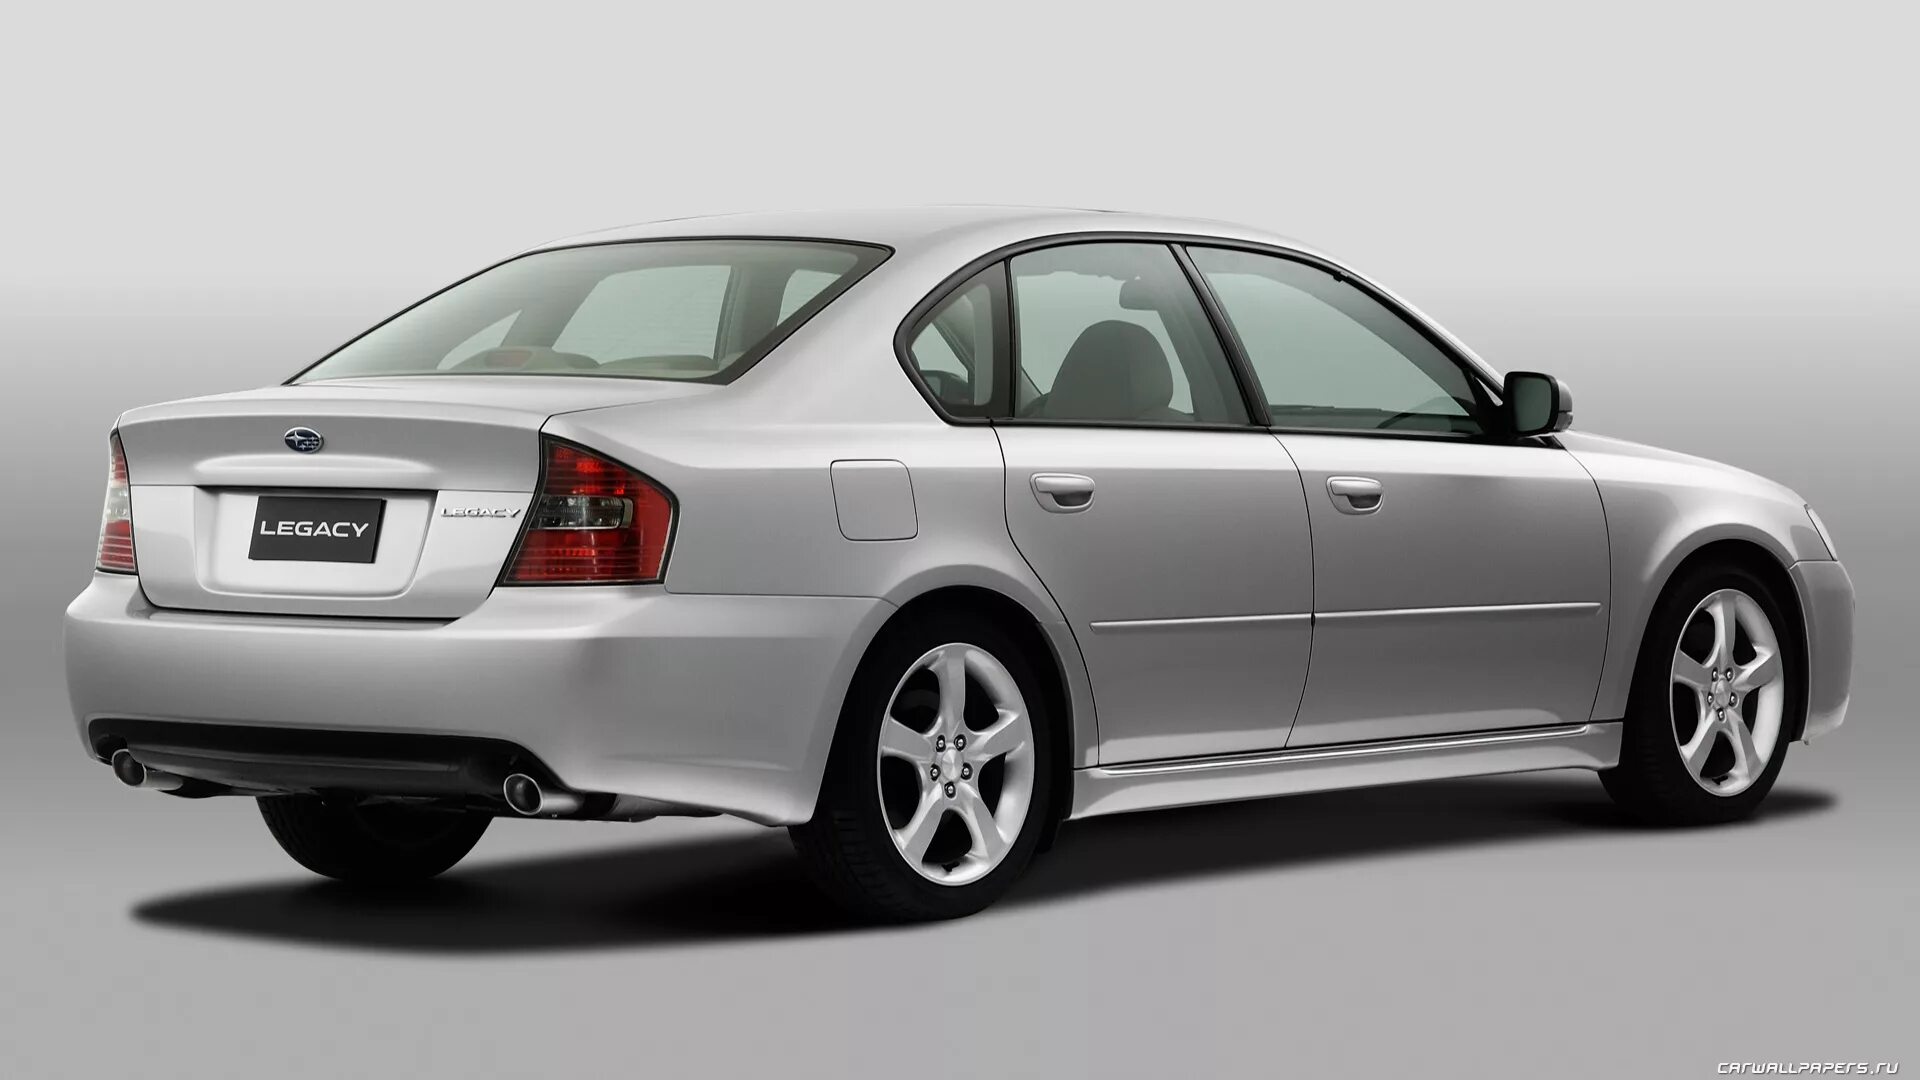 Subaru legacy 3. Subaru Legacy 2003 седан. Субару Легаси седан 2008. Субару Легаси 3 поколение седан. Subaru Legacy 2004.